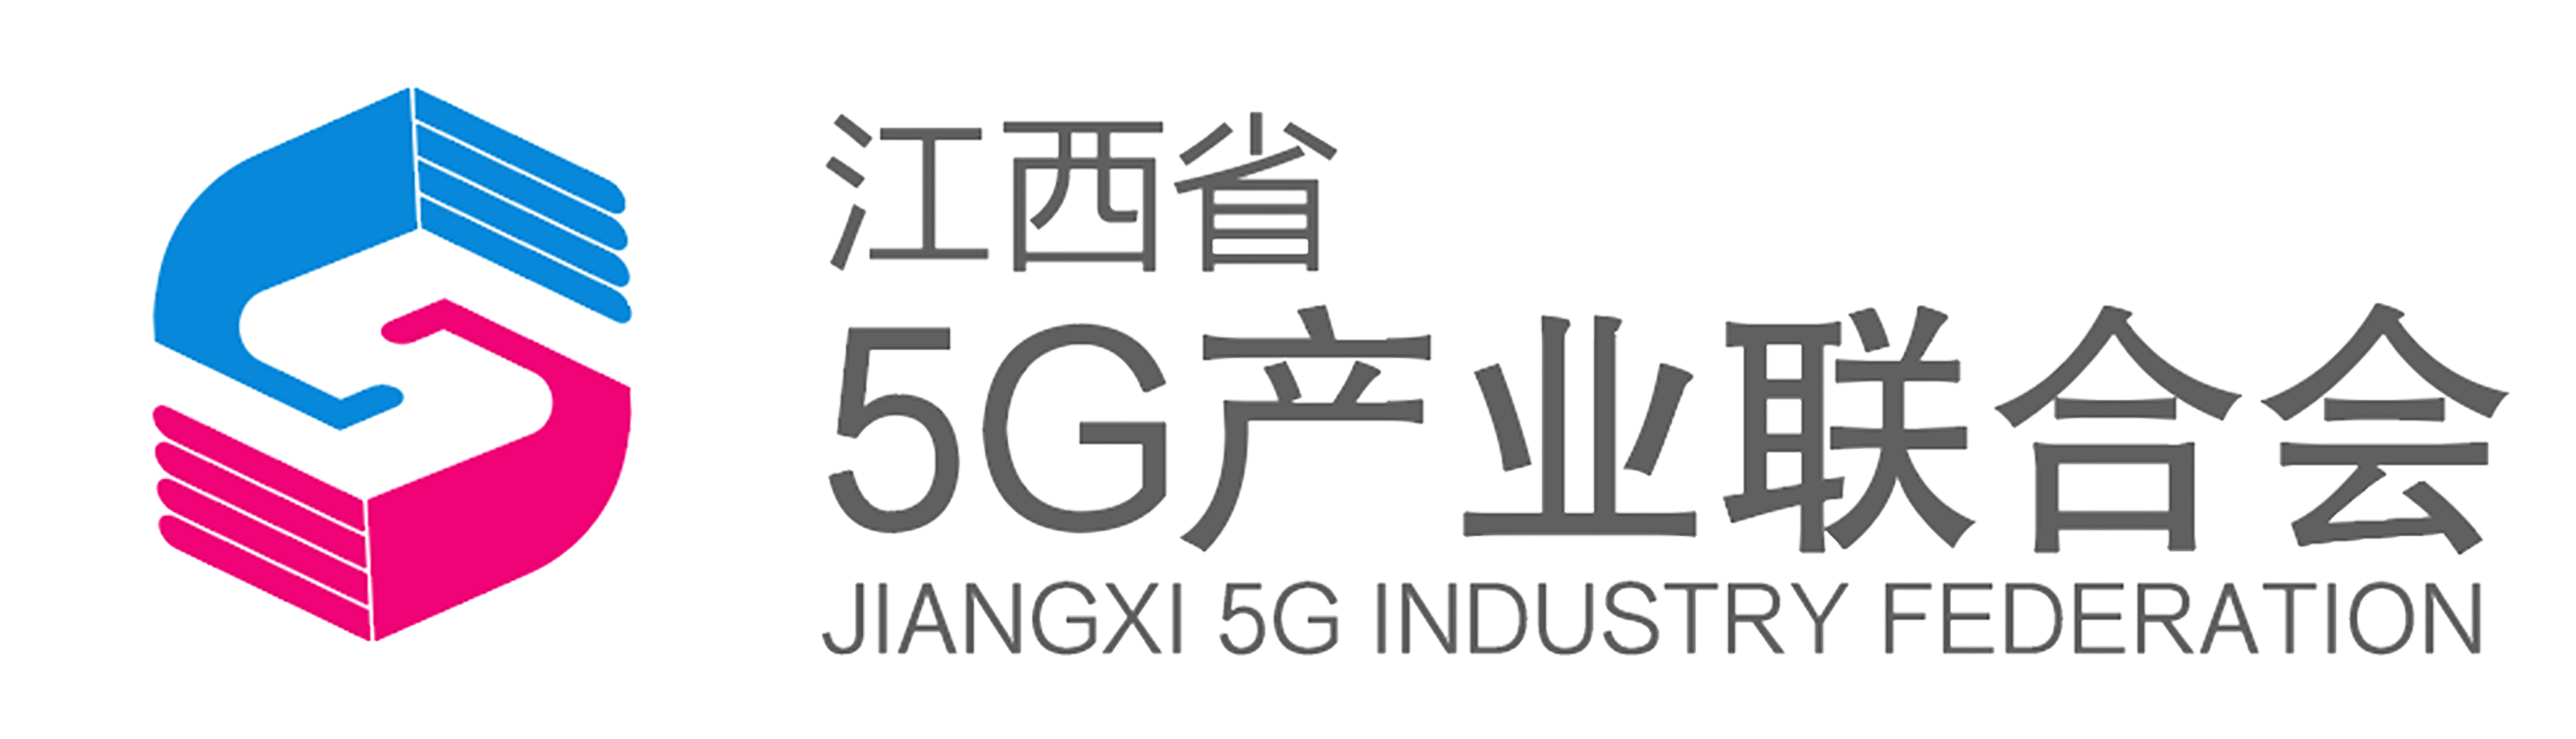 5G产业联合会.jpg